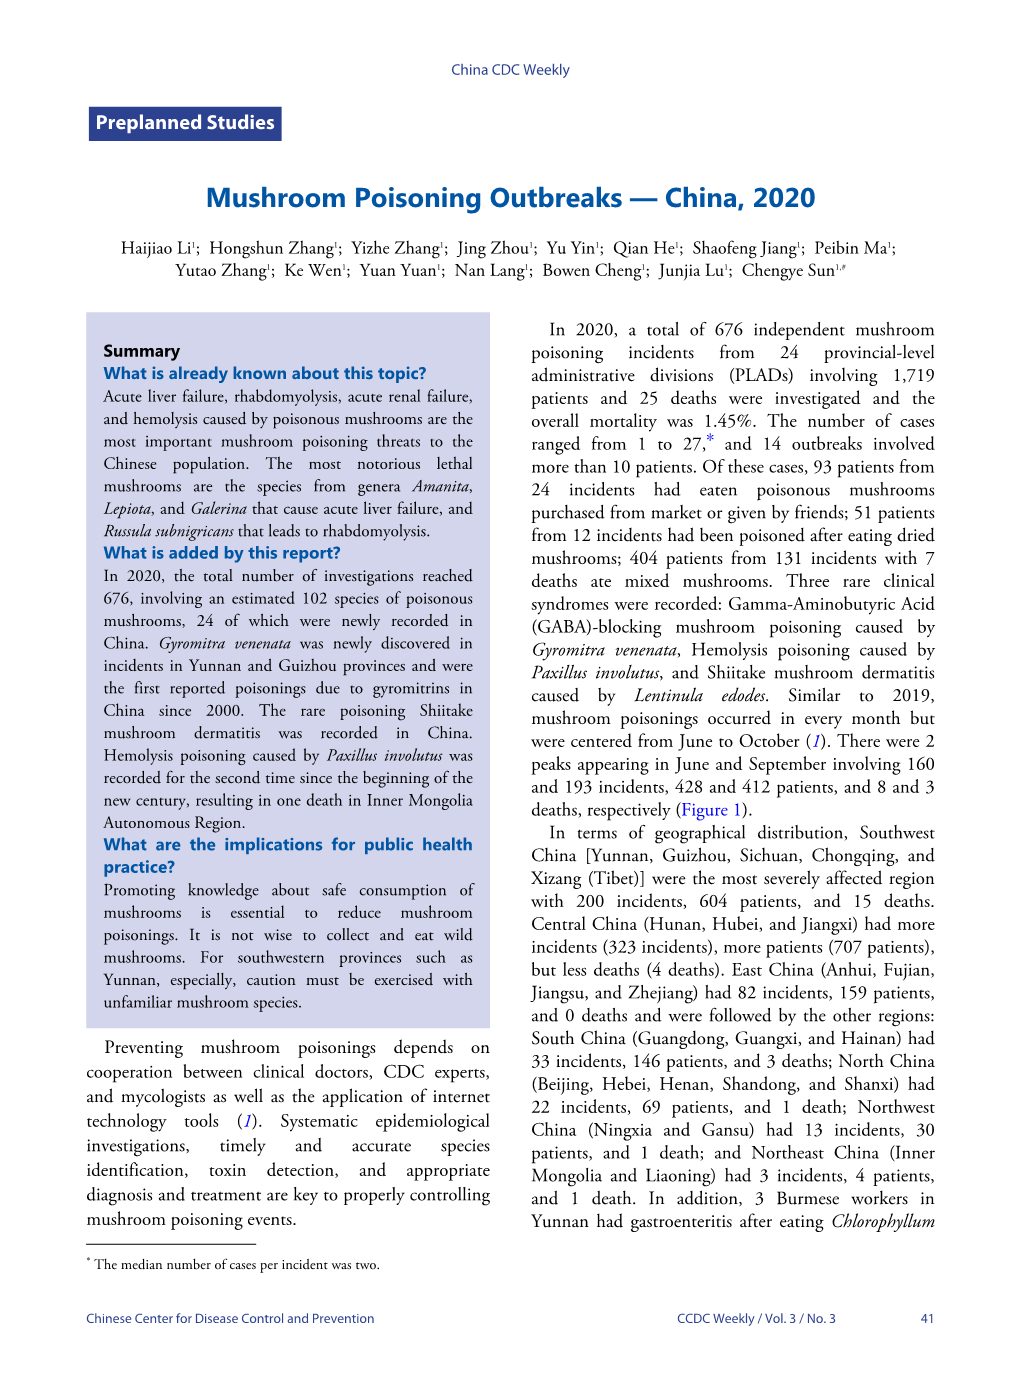 Mushroom Poisoning Outbreaks — China, 2020